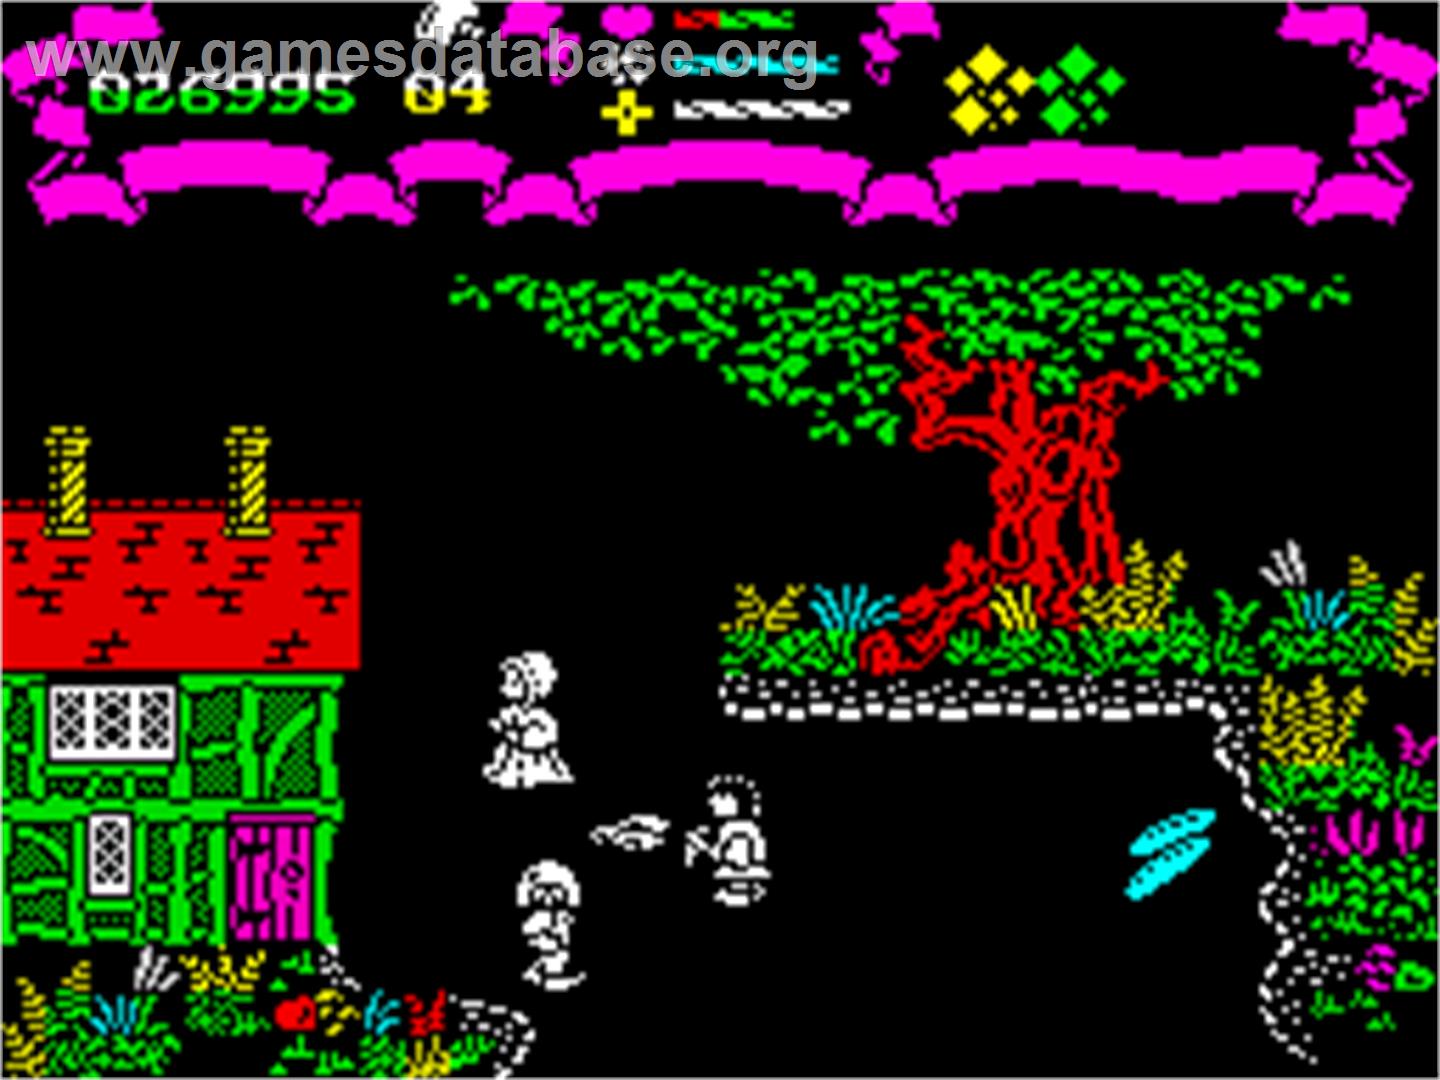 Firelord - Sinclair ZX Spectrum - Artwork - In Game